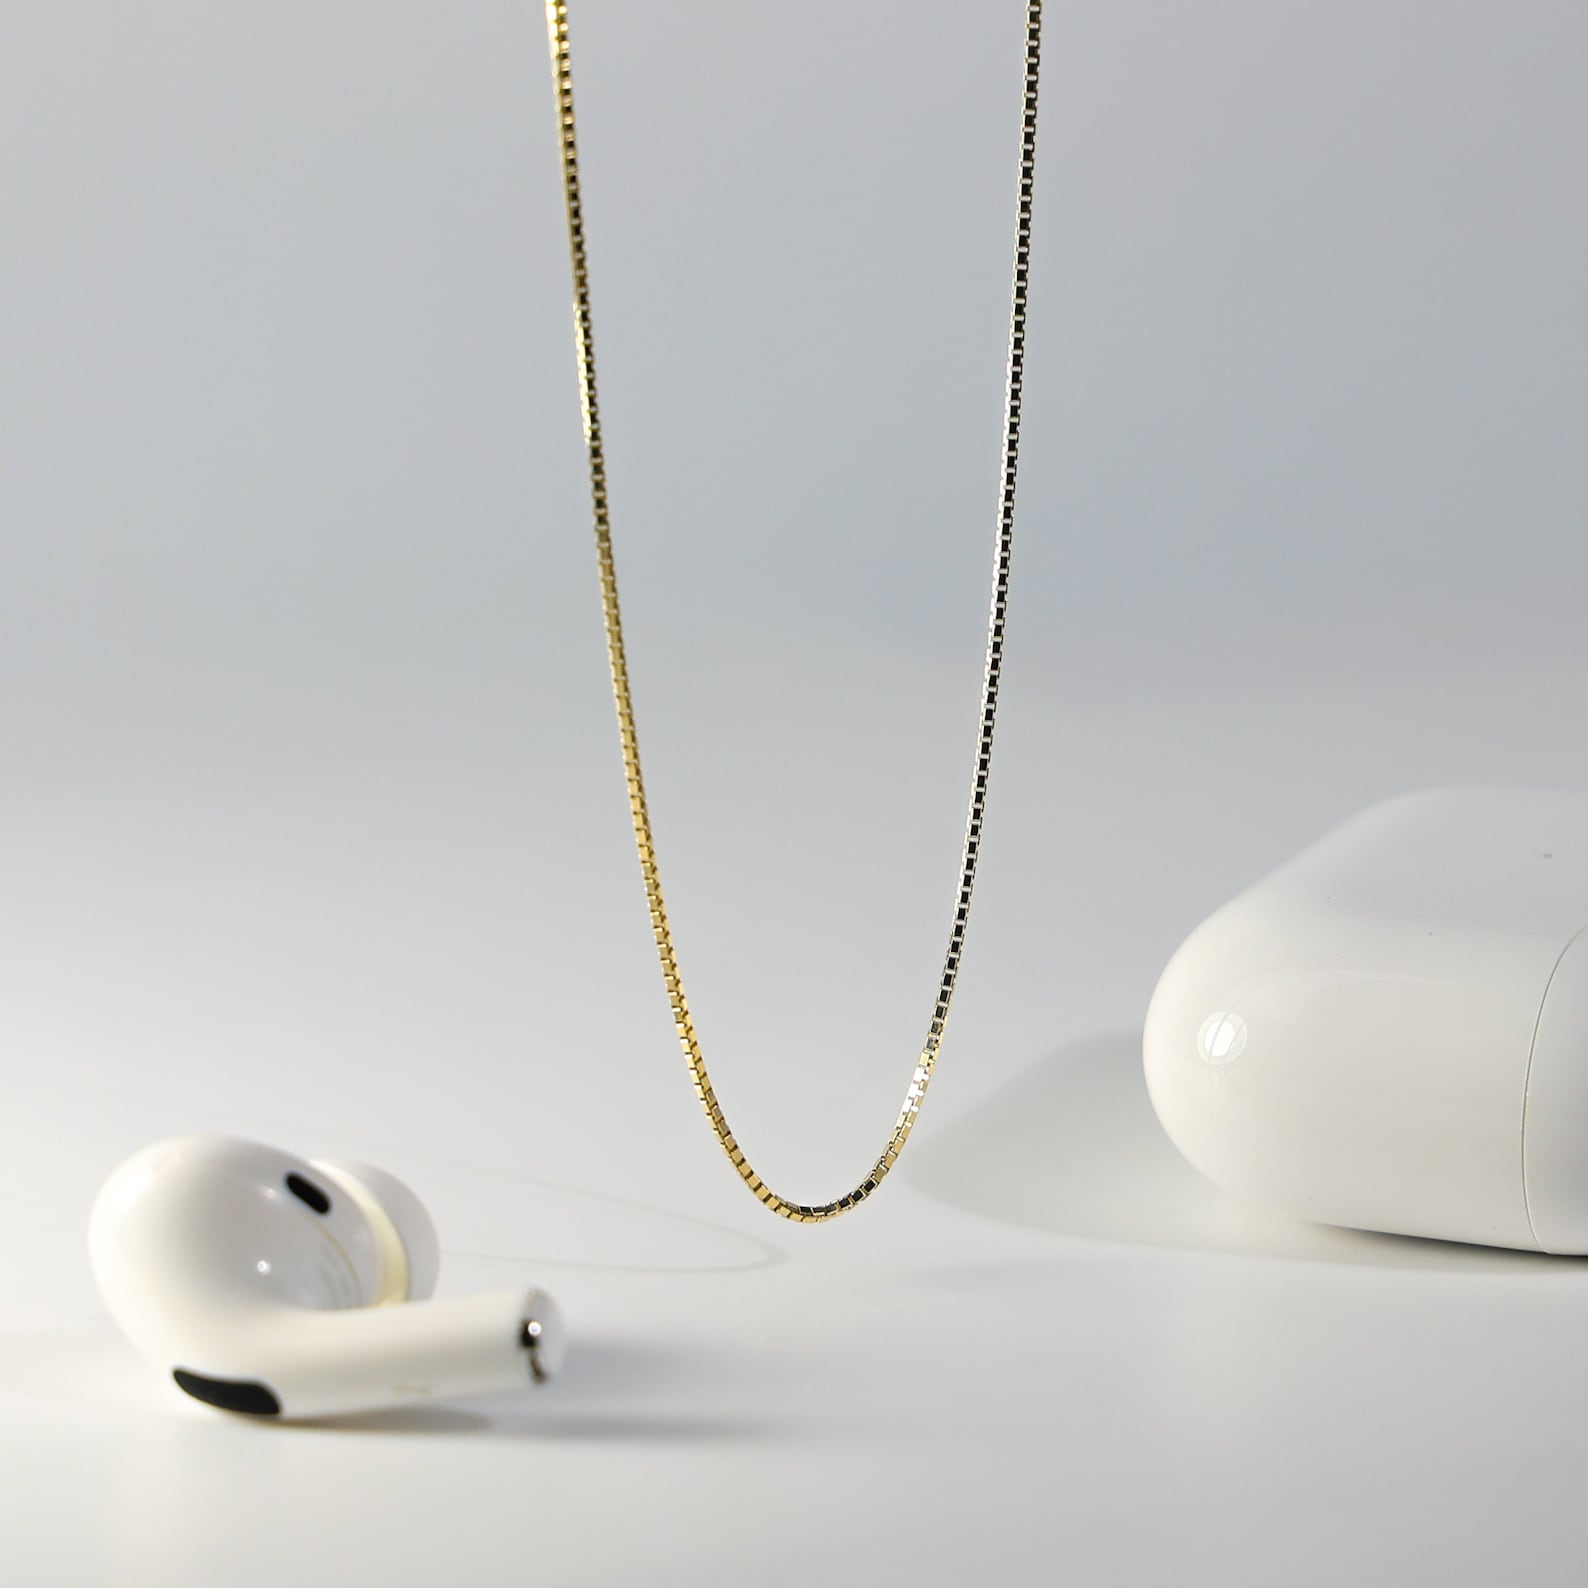 Gold Heart Locket Pendant Model-2038 - Charlie & Co. Jewelry